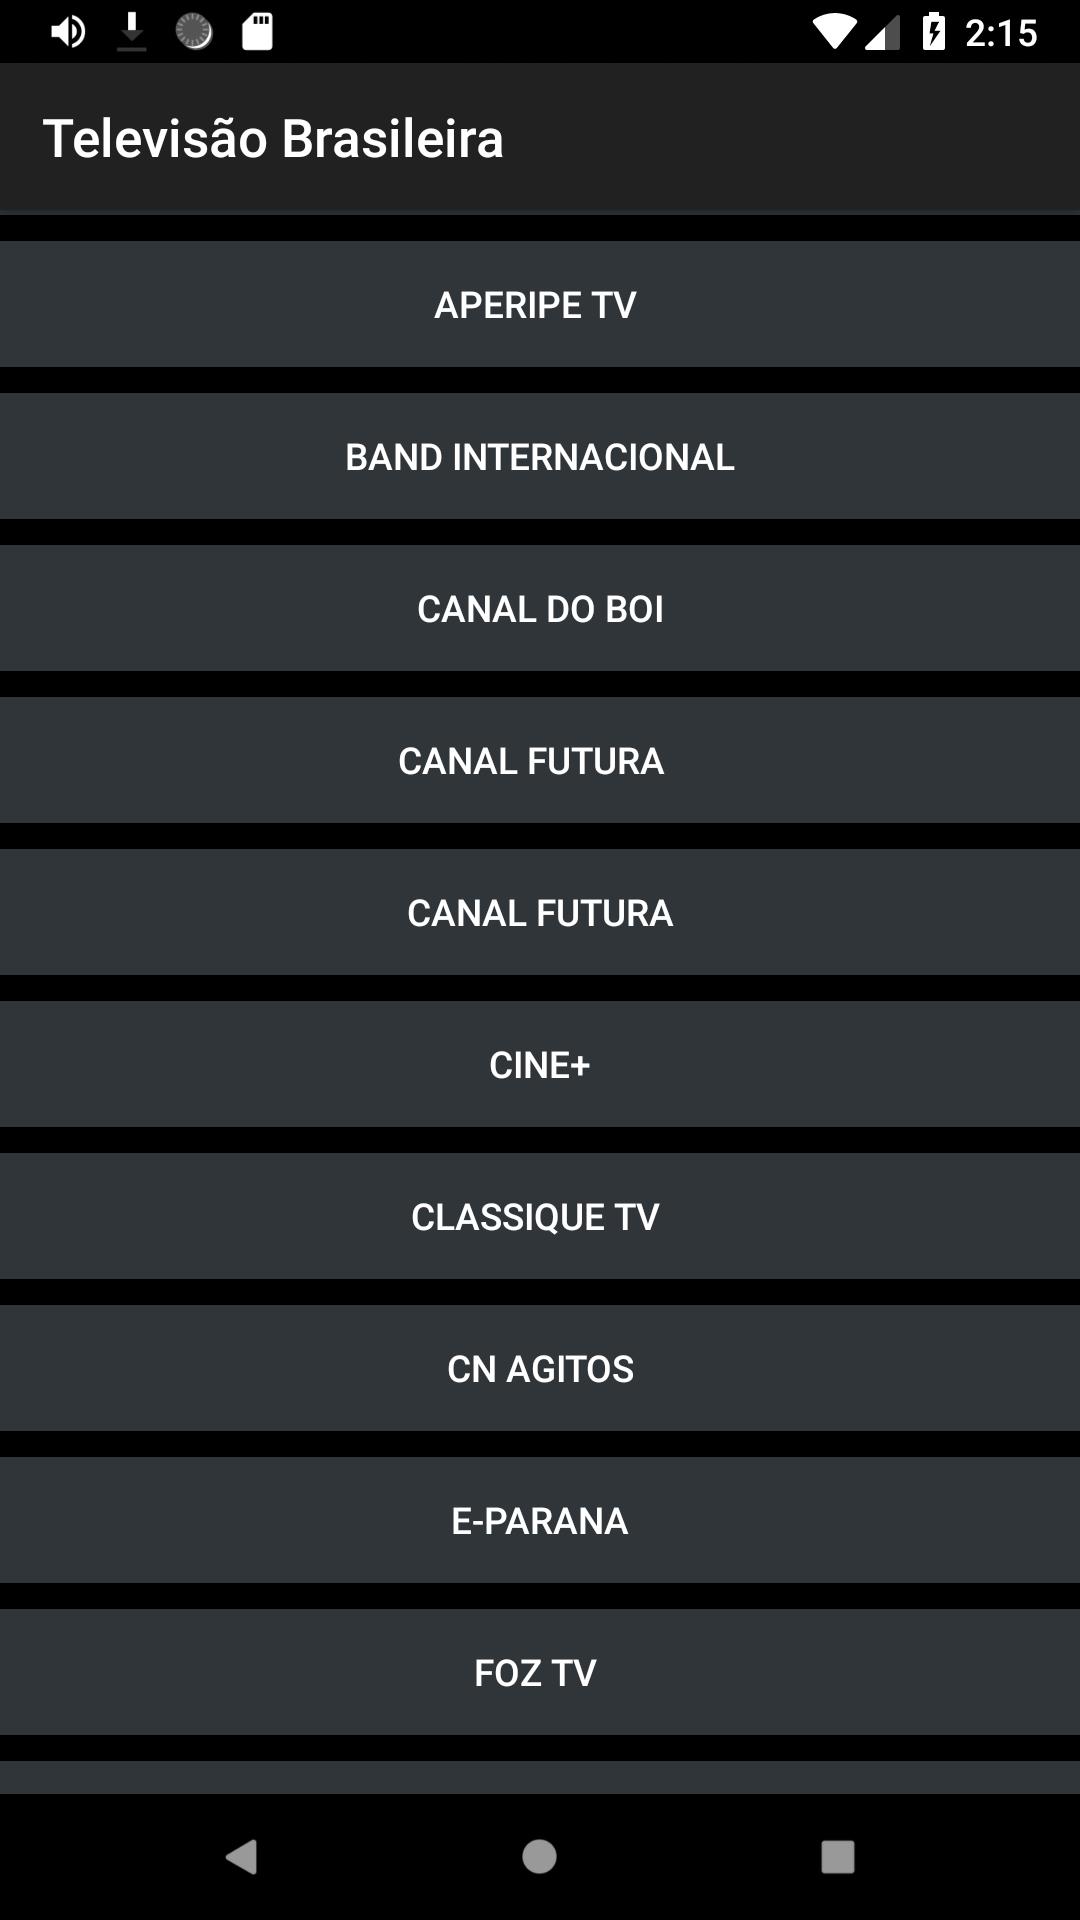 TV Brasil Ao Vivo for Android - APK Download